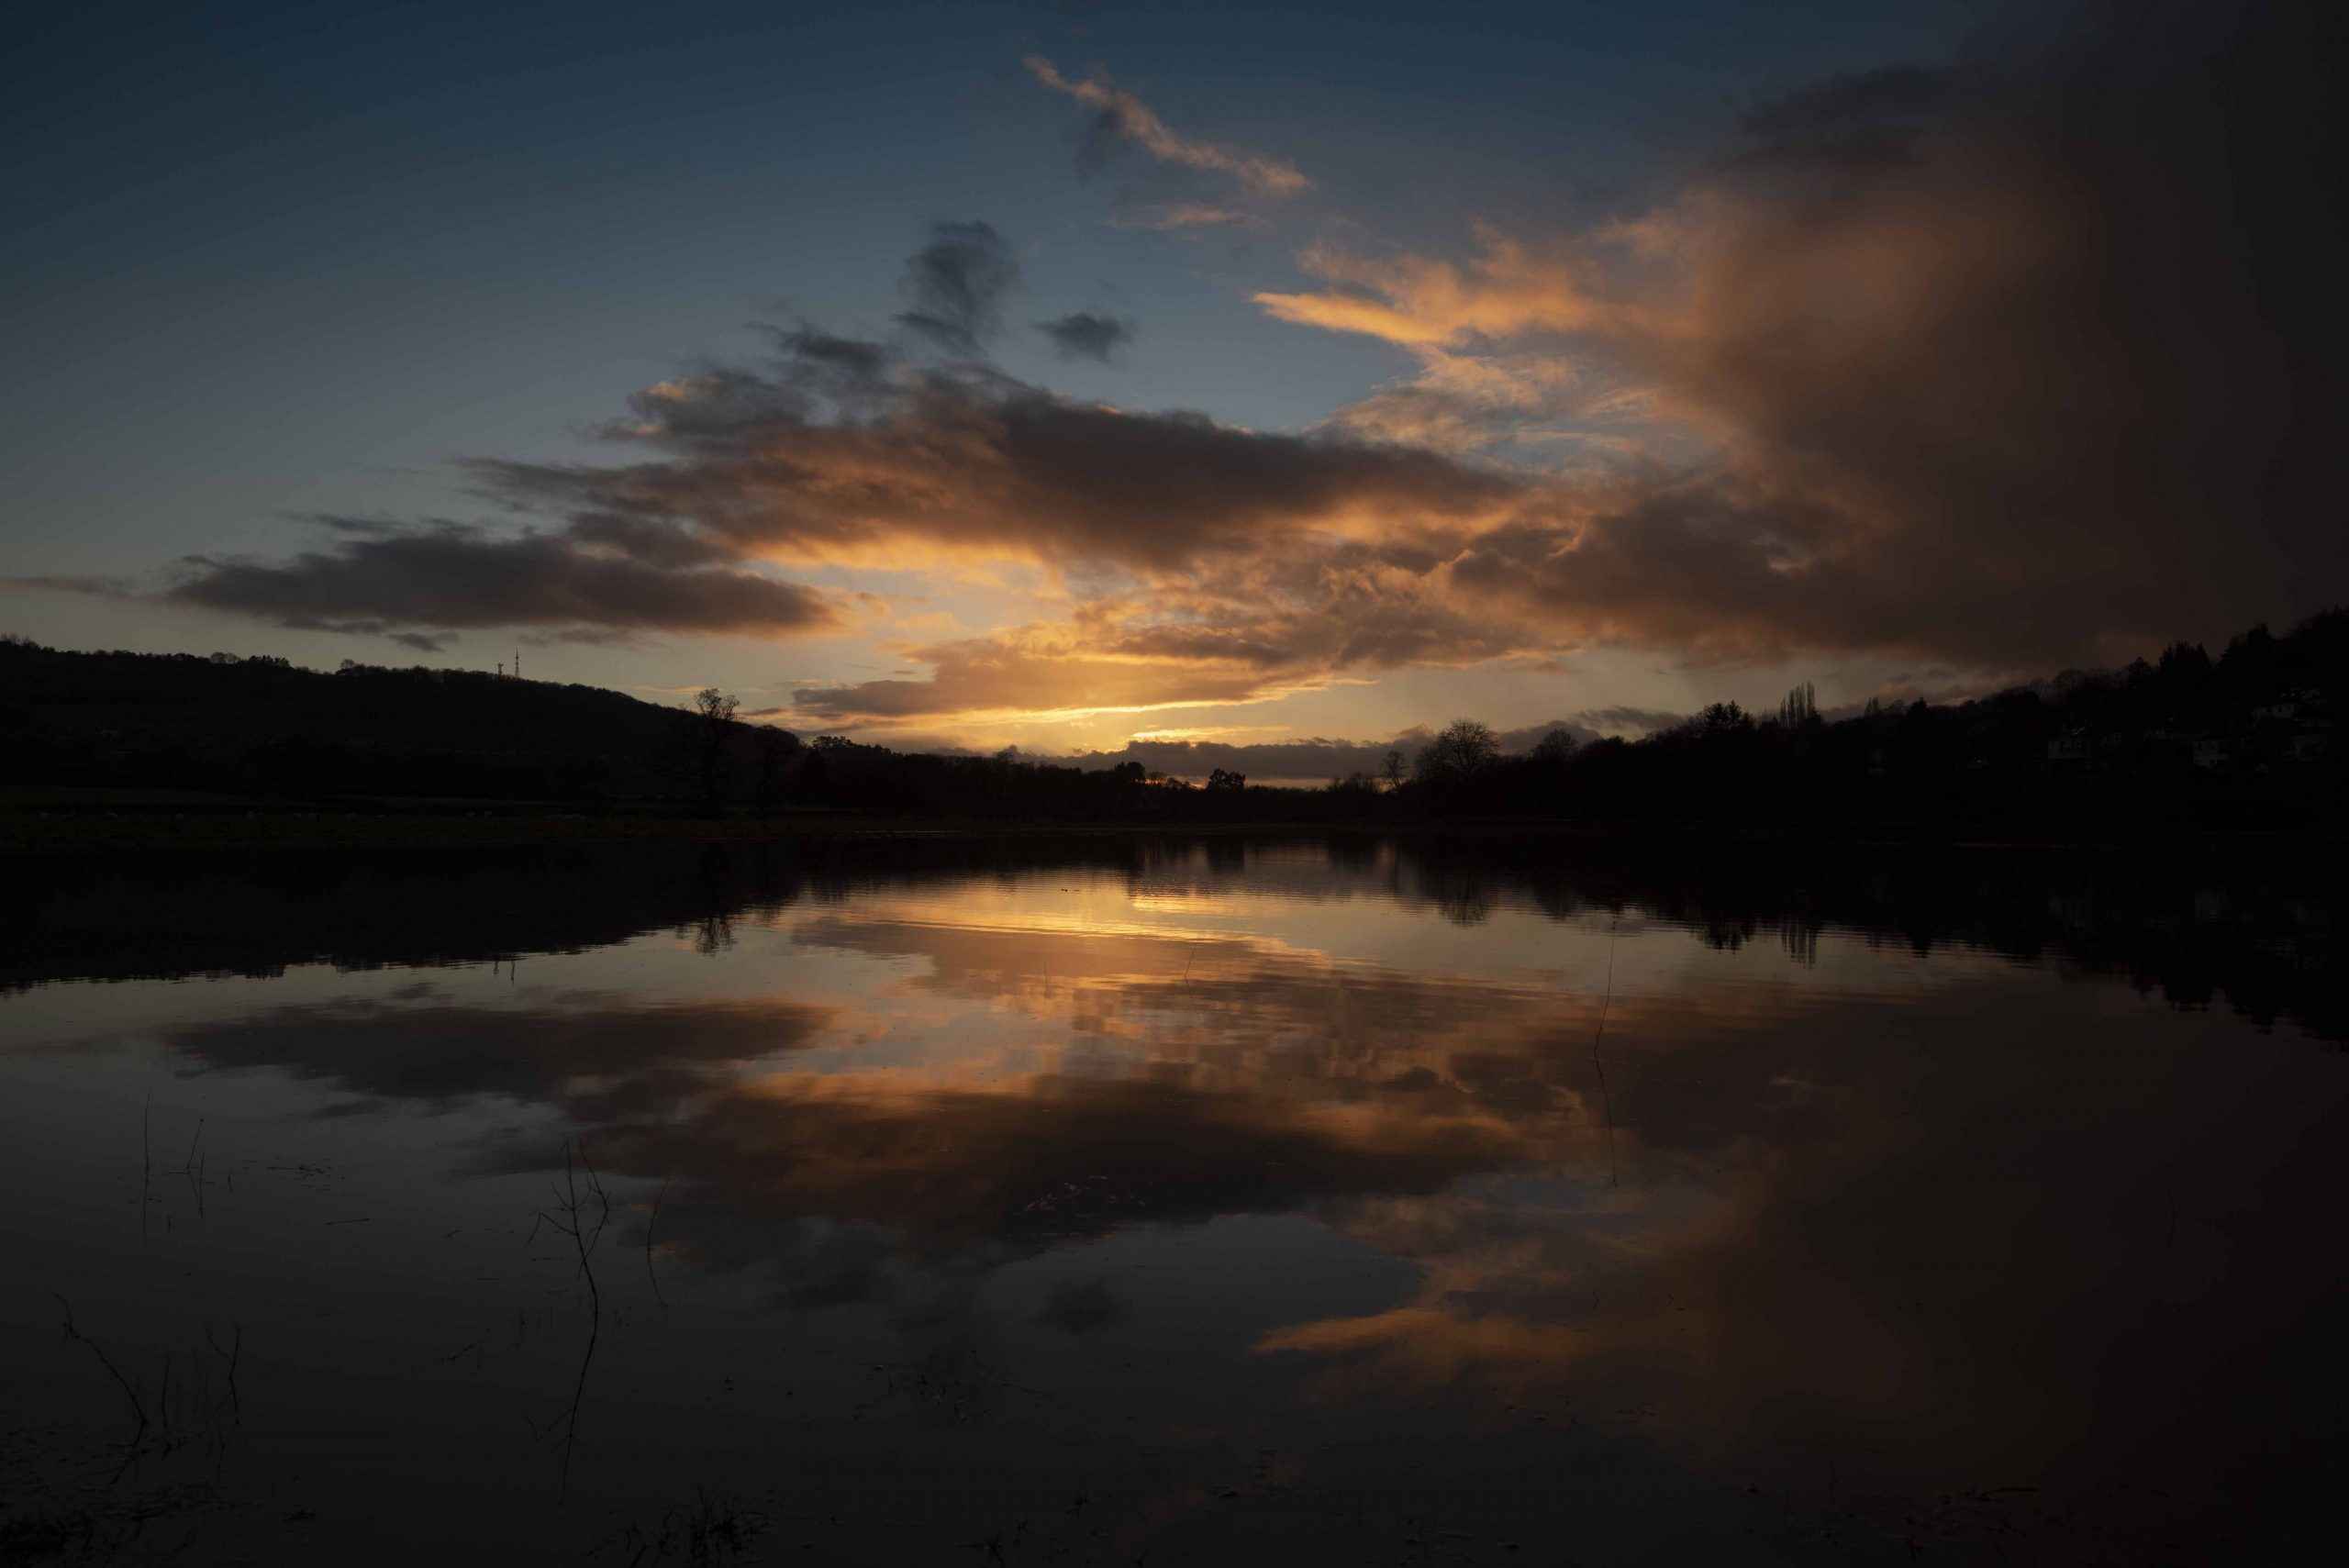 Bathampton sunset © Austen O’Hanlon 2021